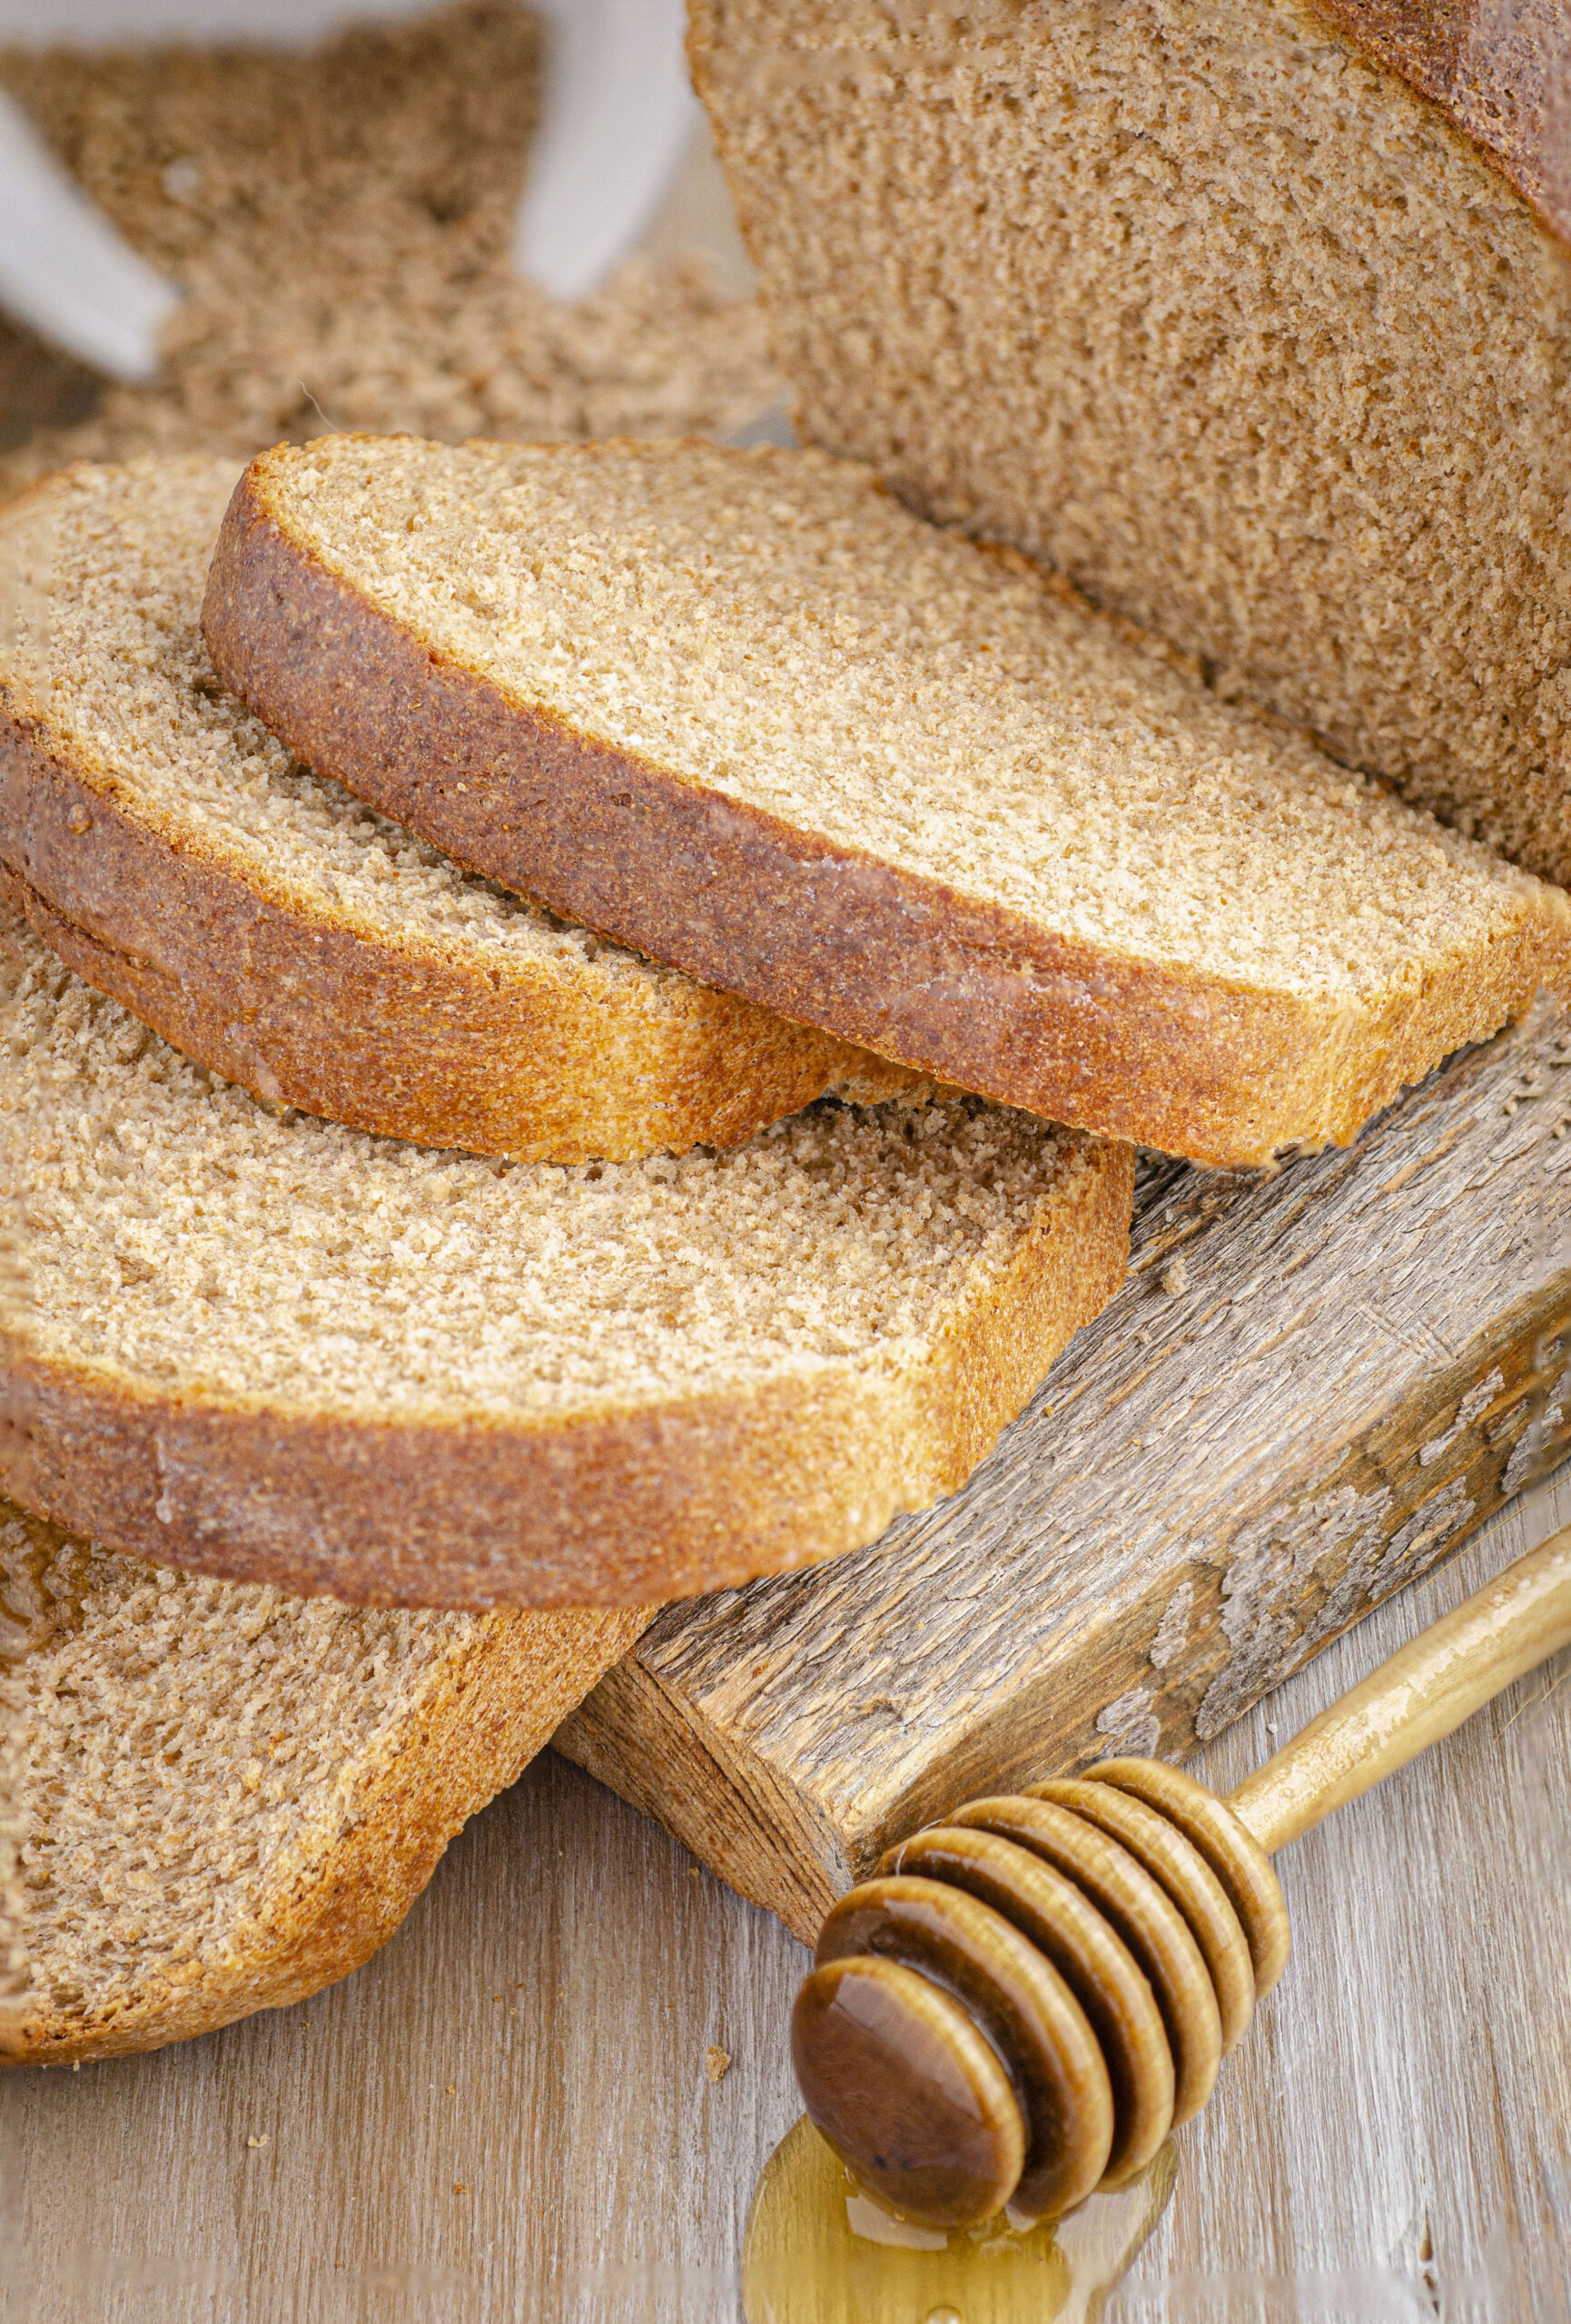 How to Make Whole Wheat Bread - Joyous Home